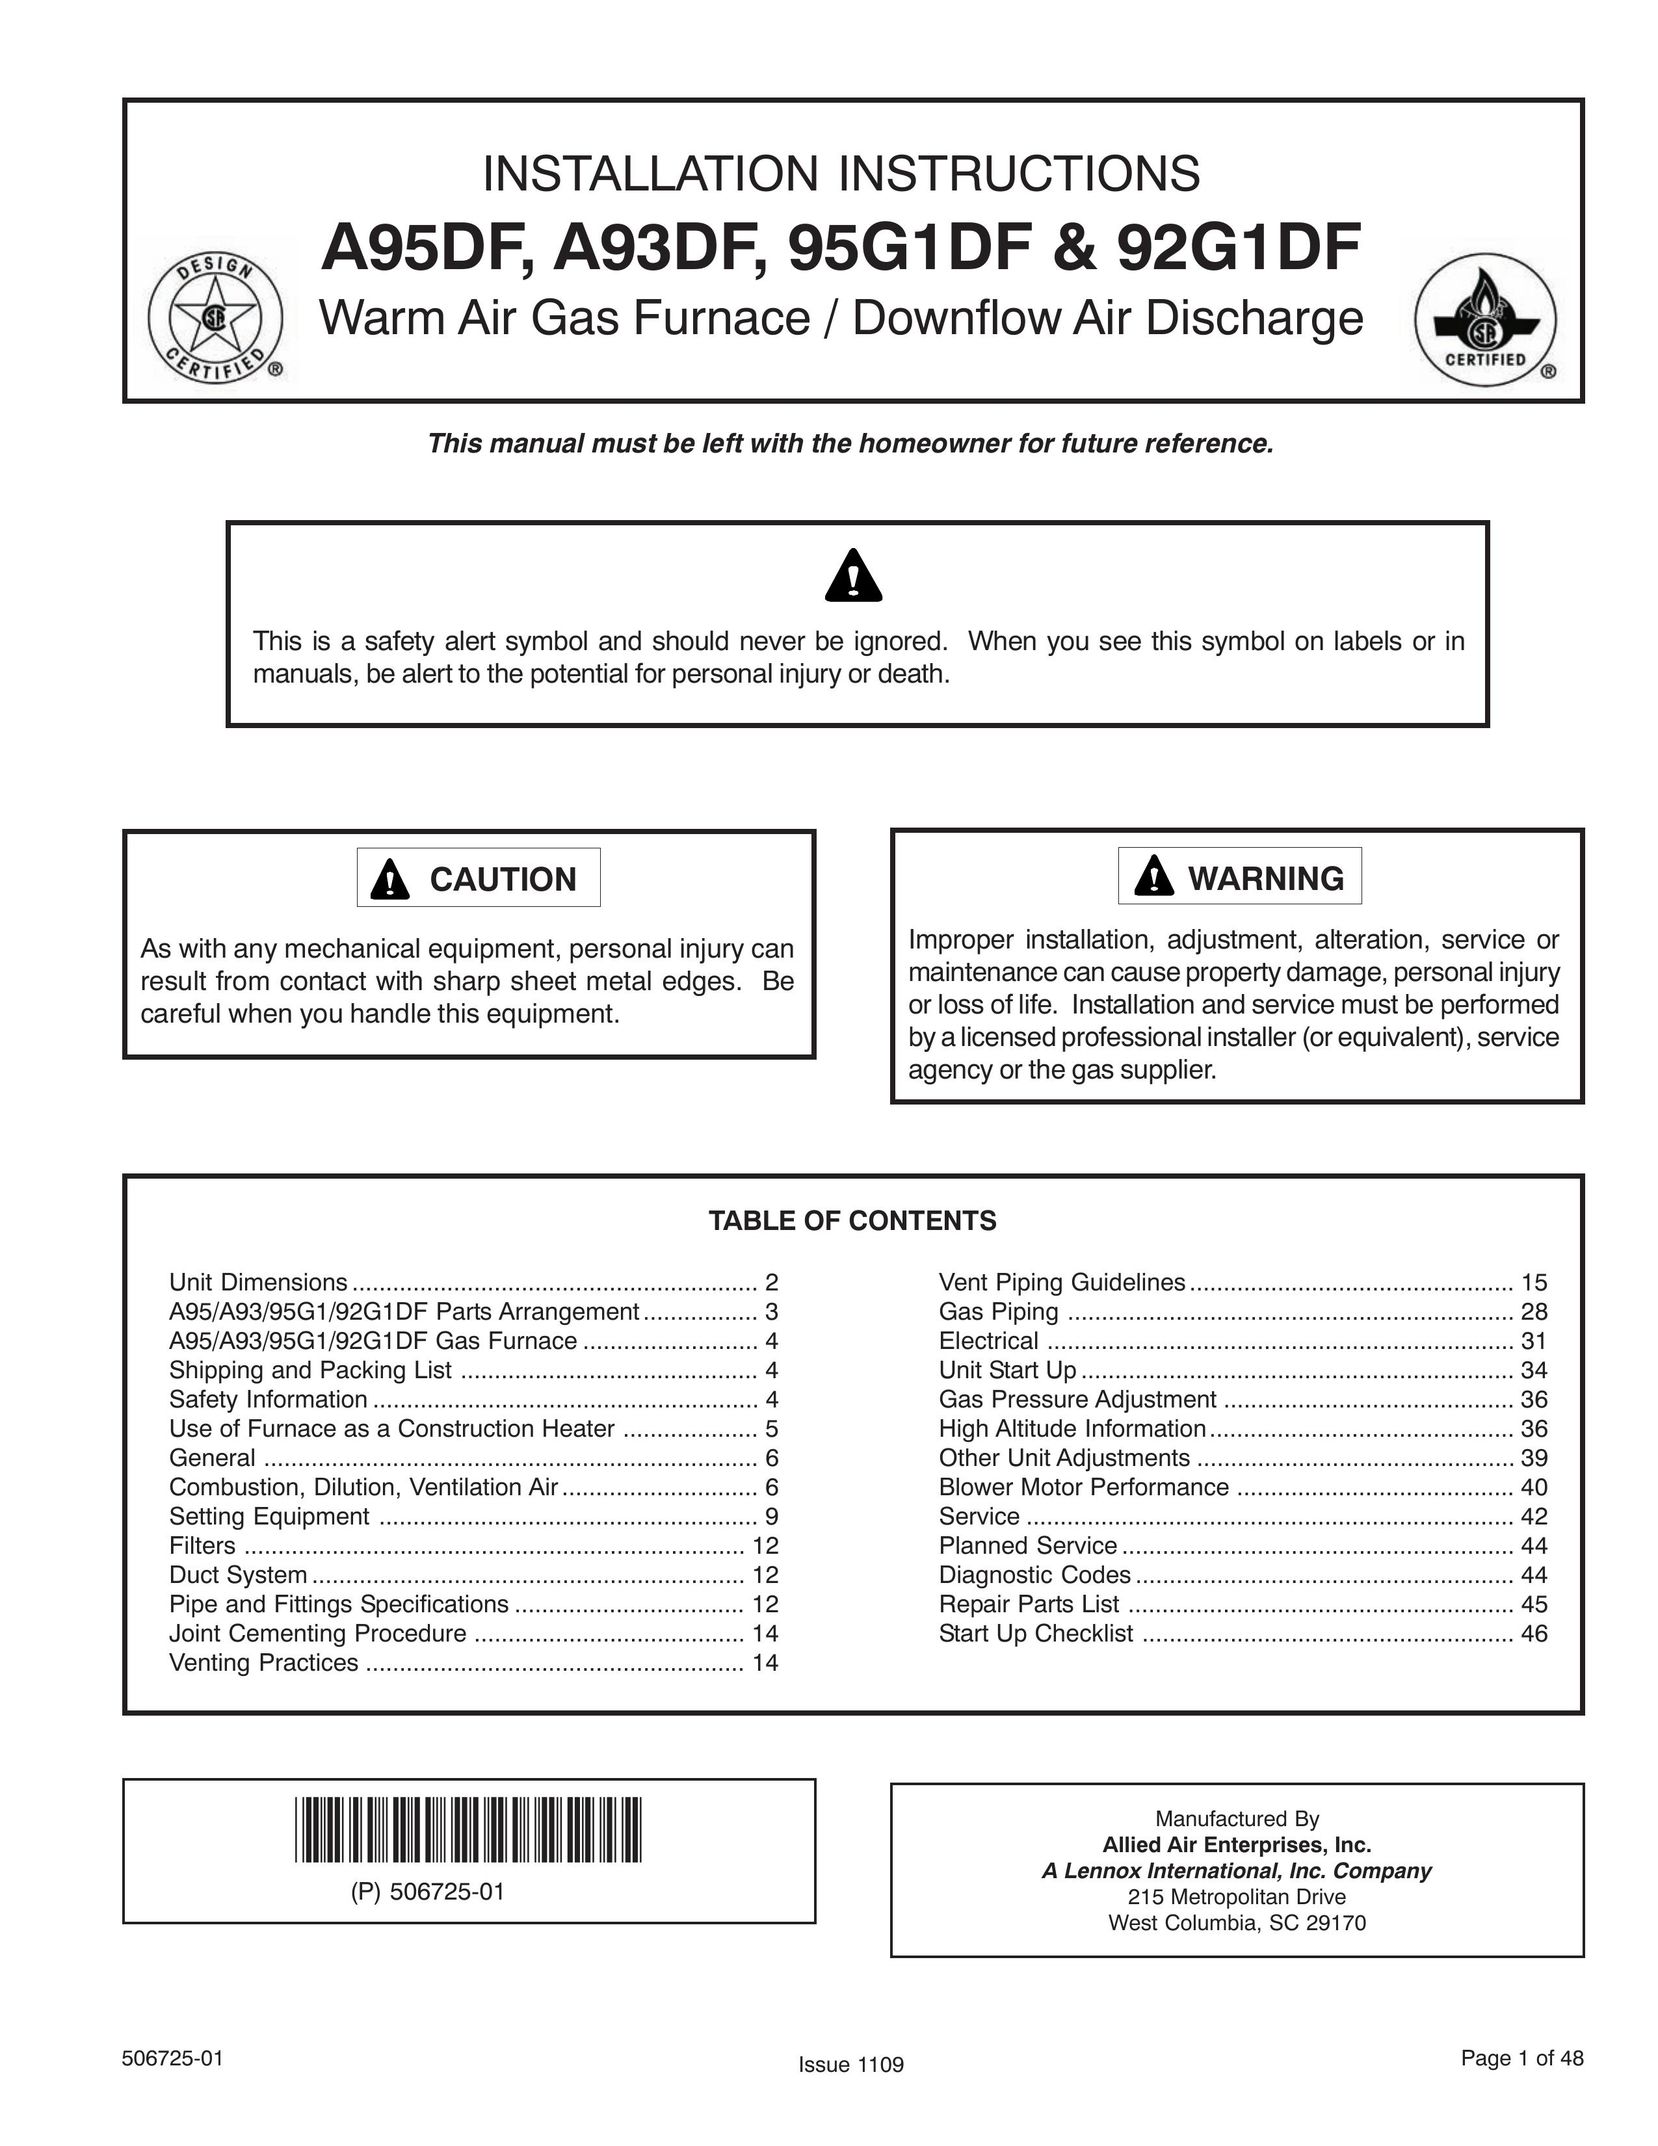 Allied Air Enterprises 92G1DF Furnace User Manual